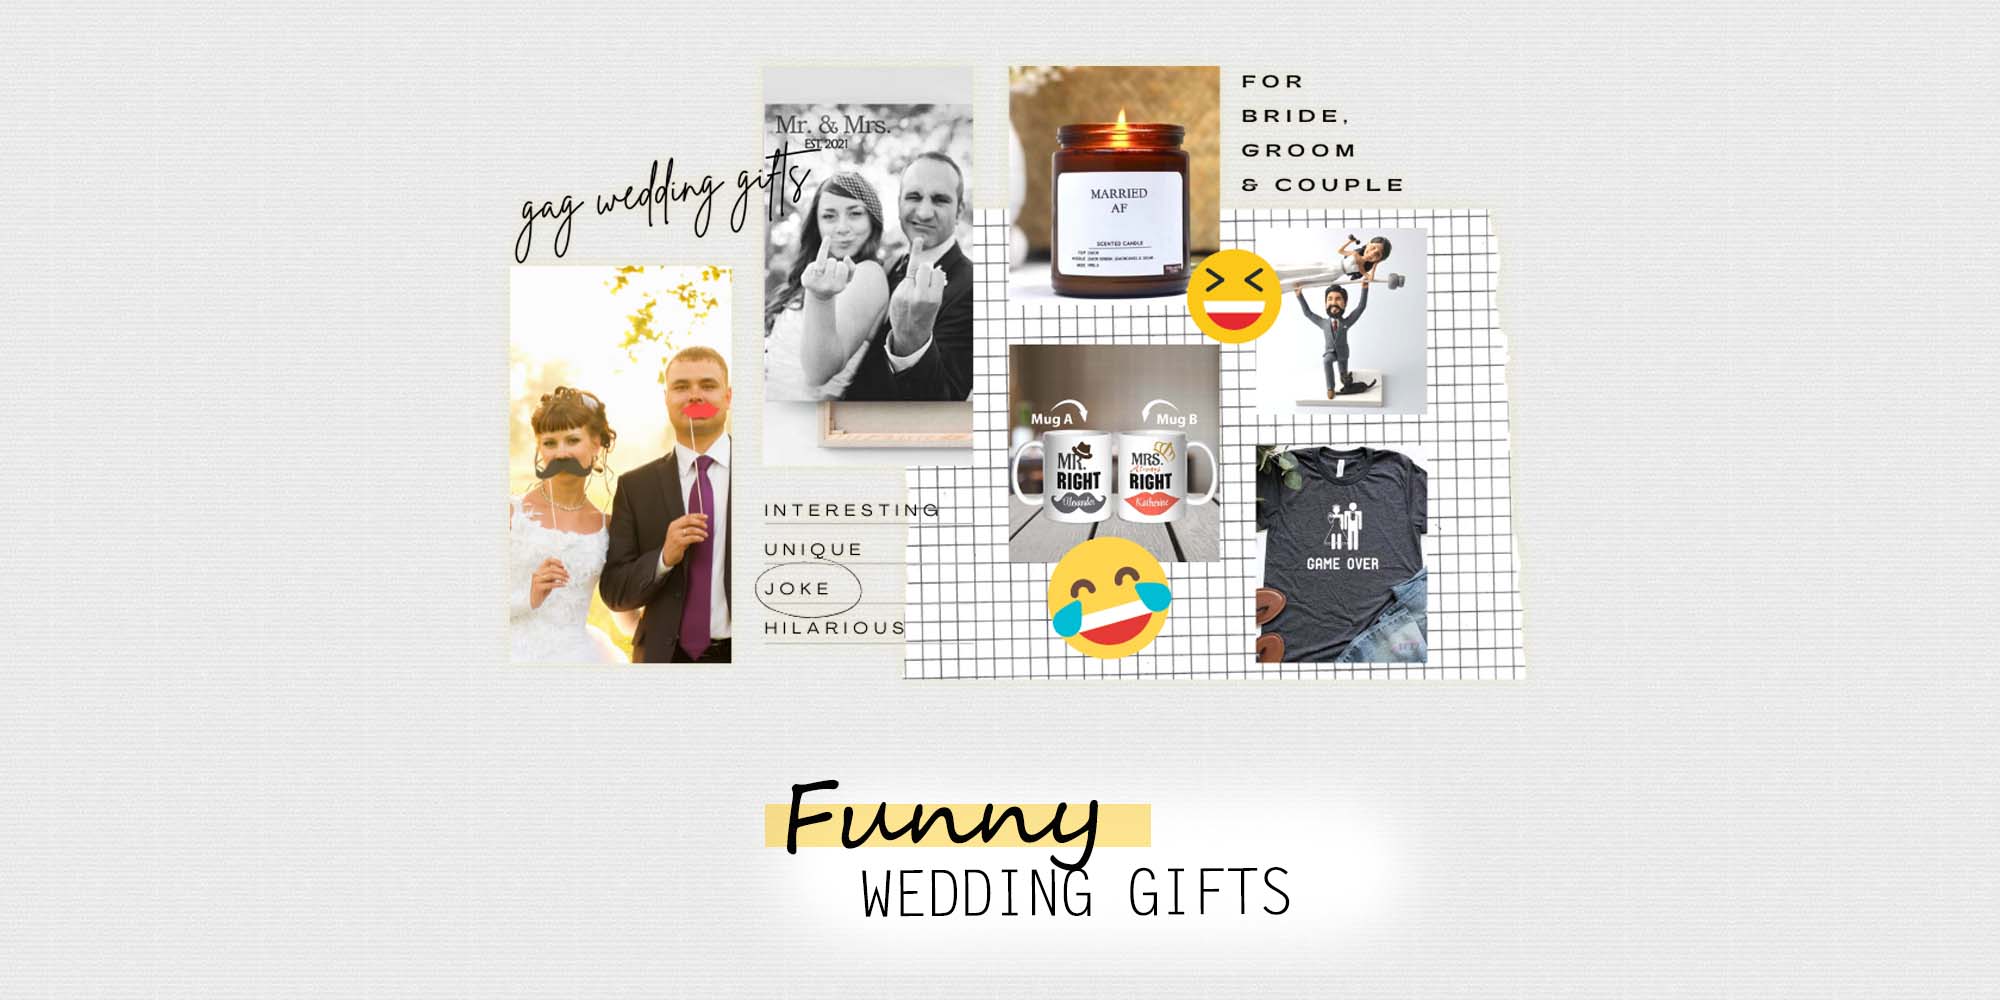 Unique  Creative Wedding Gifts Ideas for Couple Friends Wedding Bride   Perfico